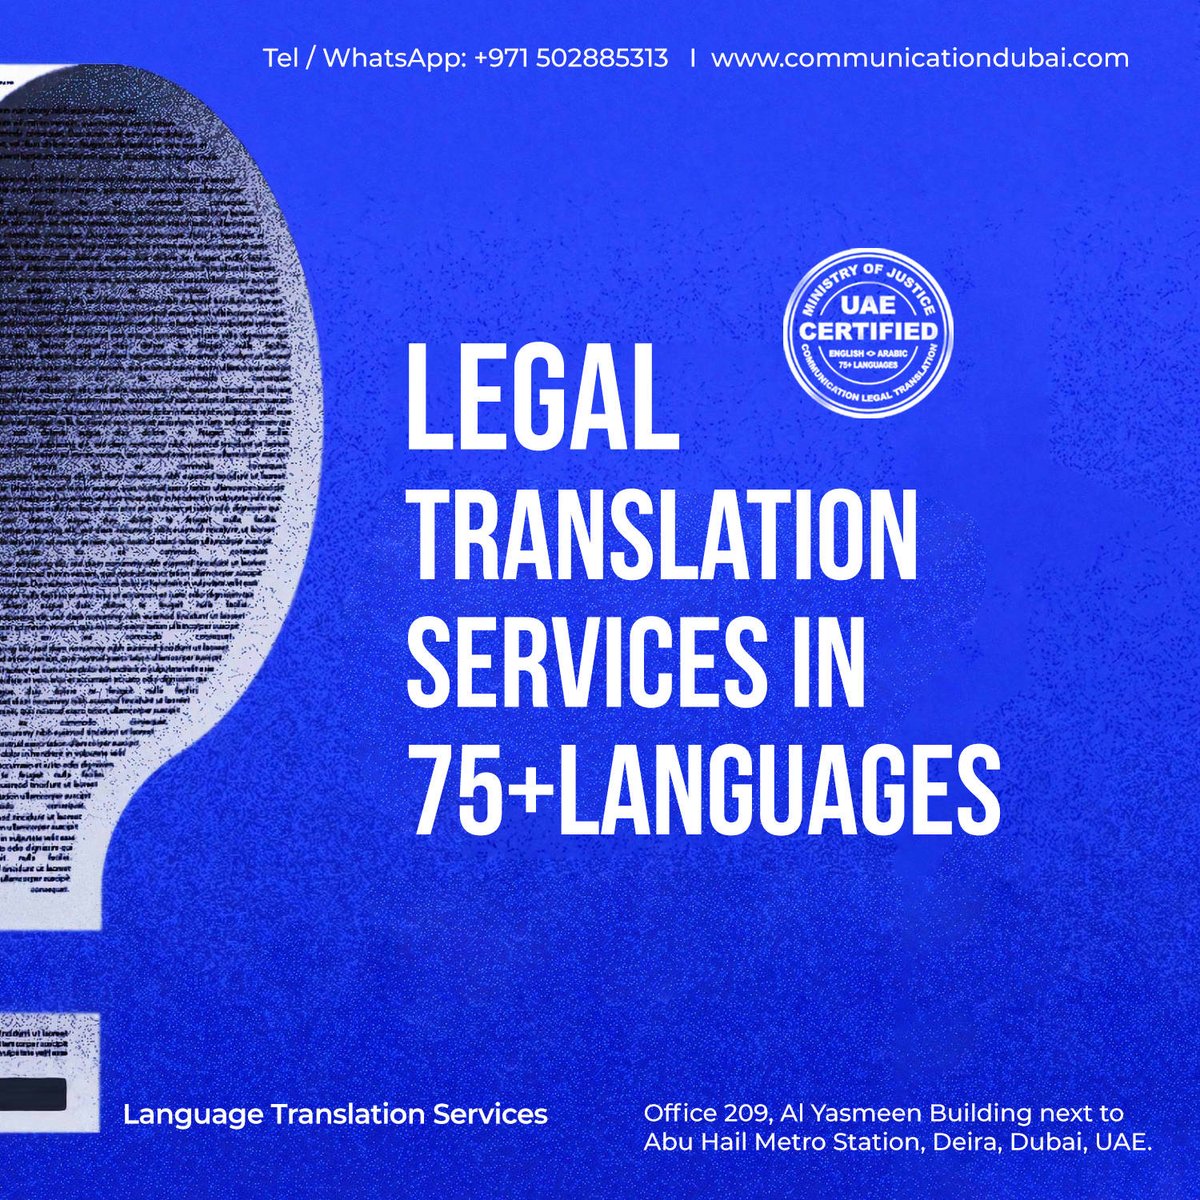 Tel / WhatsApp: +971 502885313 I communicationdubai.com

#languagetranslationservices #translation #axenda #lsp #translating #translationservices #translationagency #bpo #leaseadministration #graphicsdesigner #realestate #slasinfo